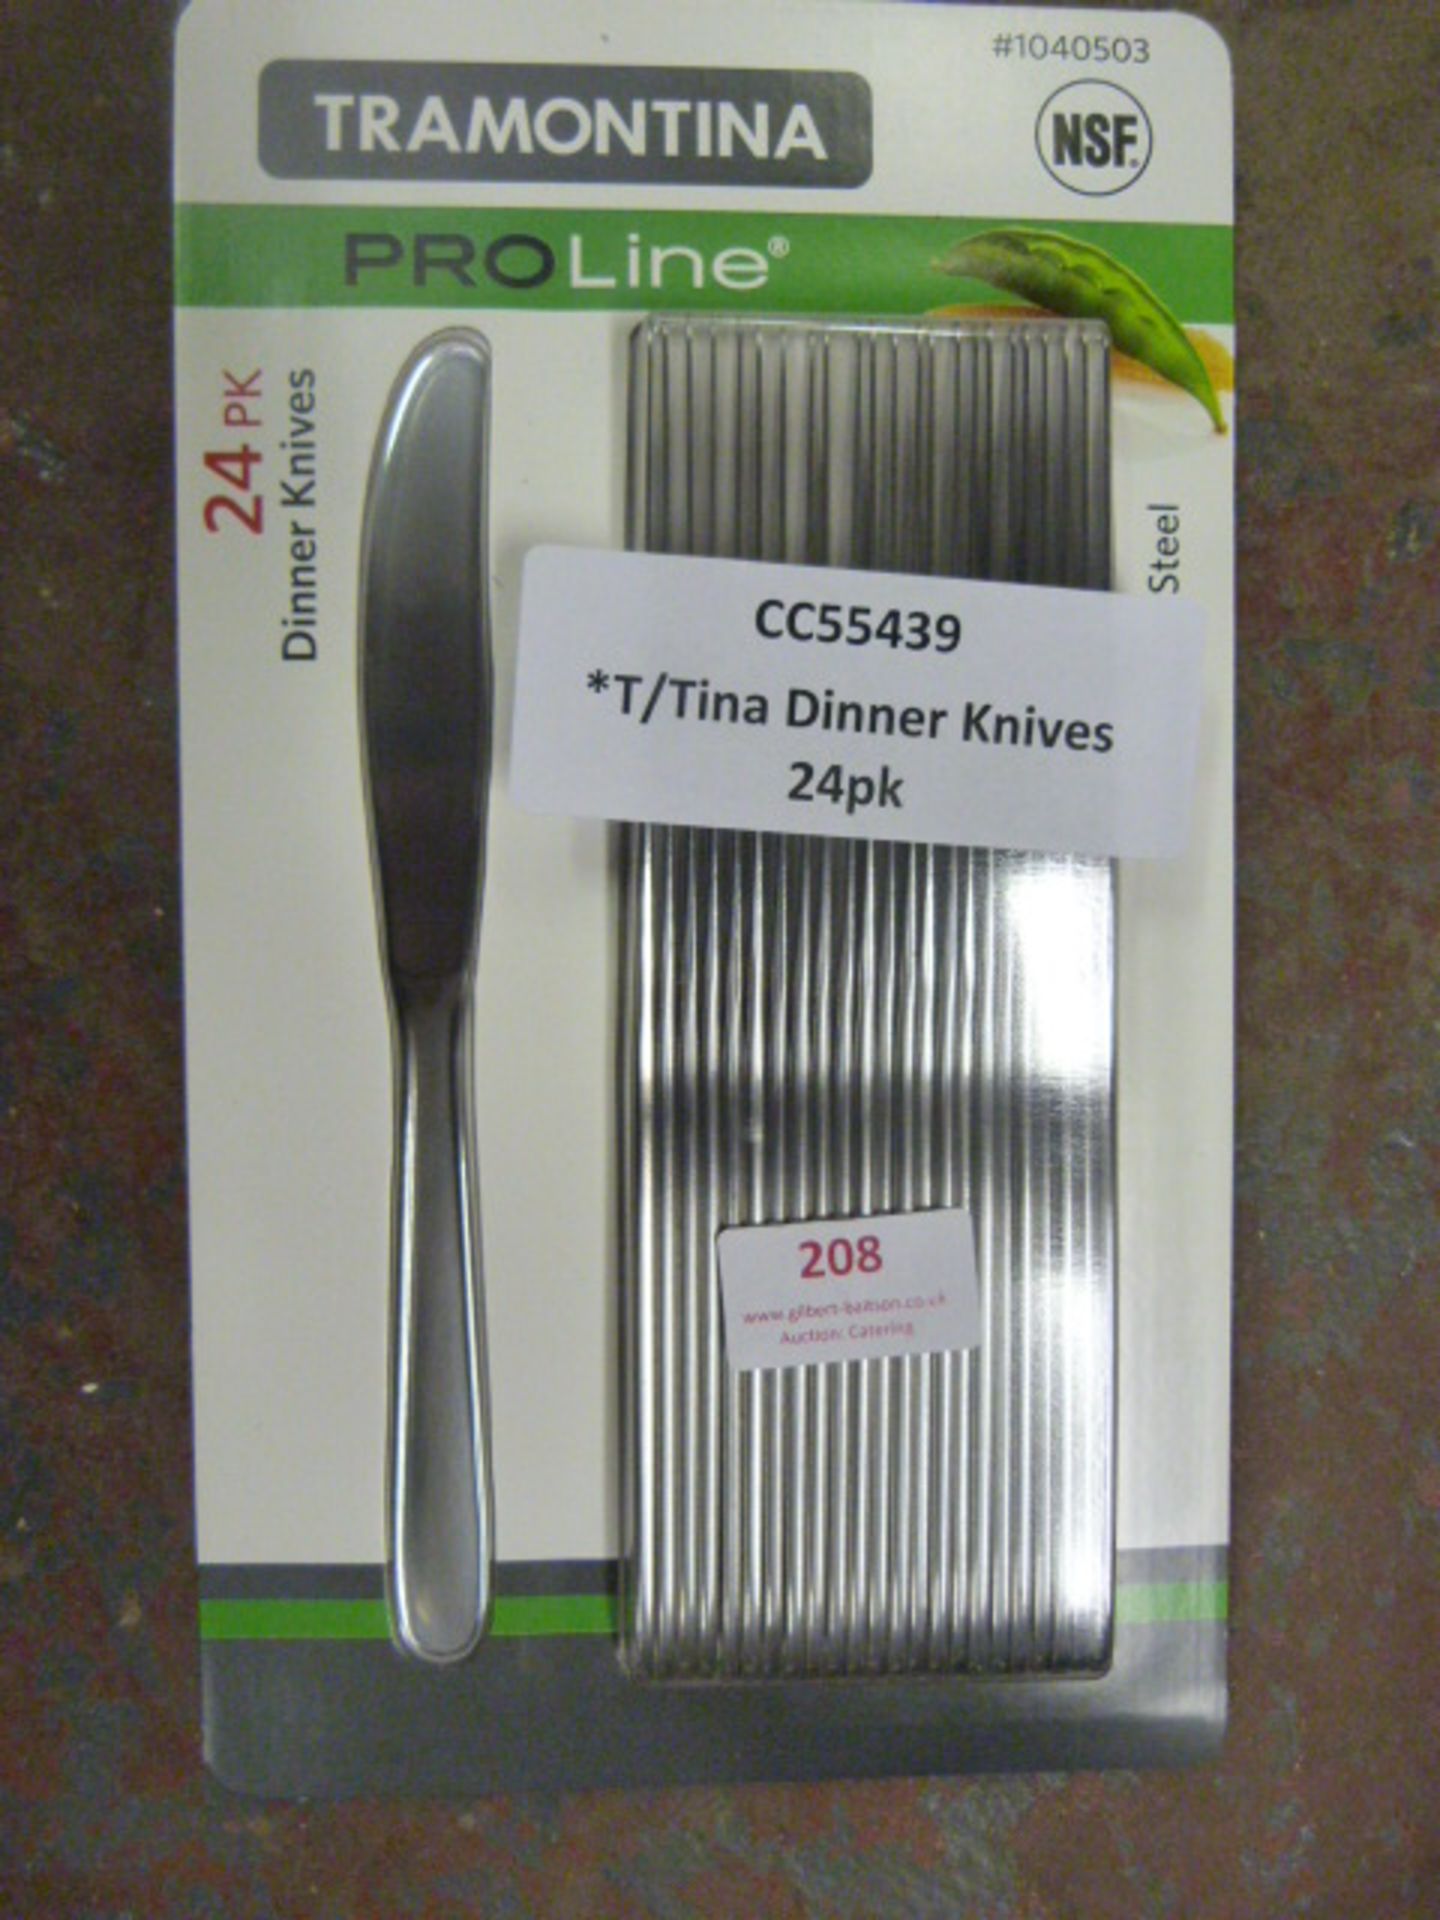 *T/Tina Dinner Knives 24pk